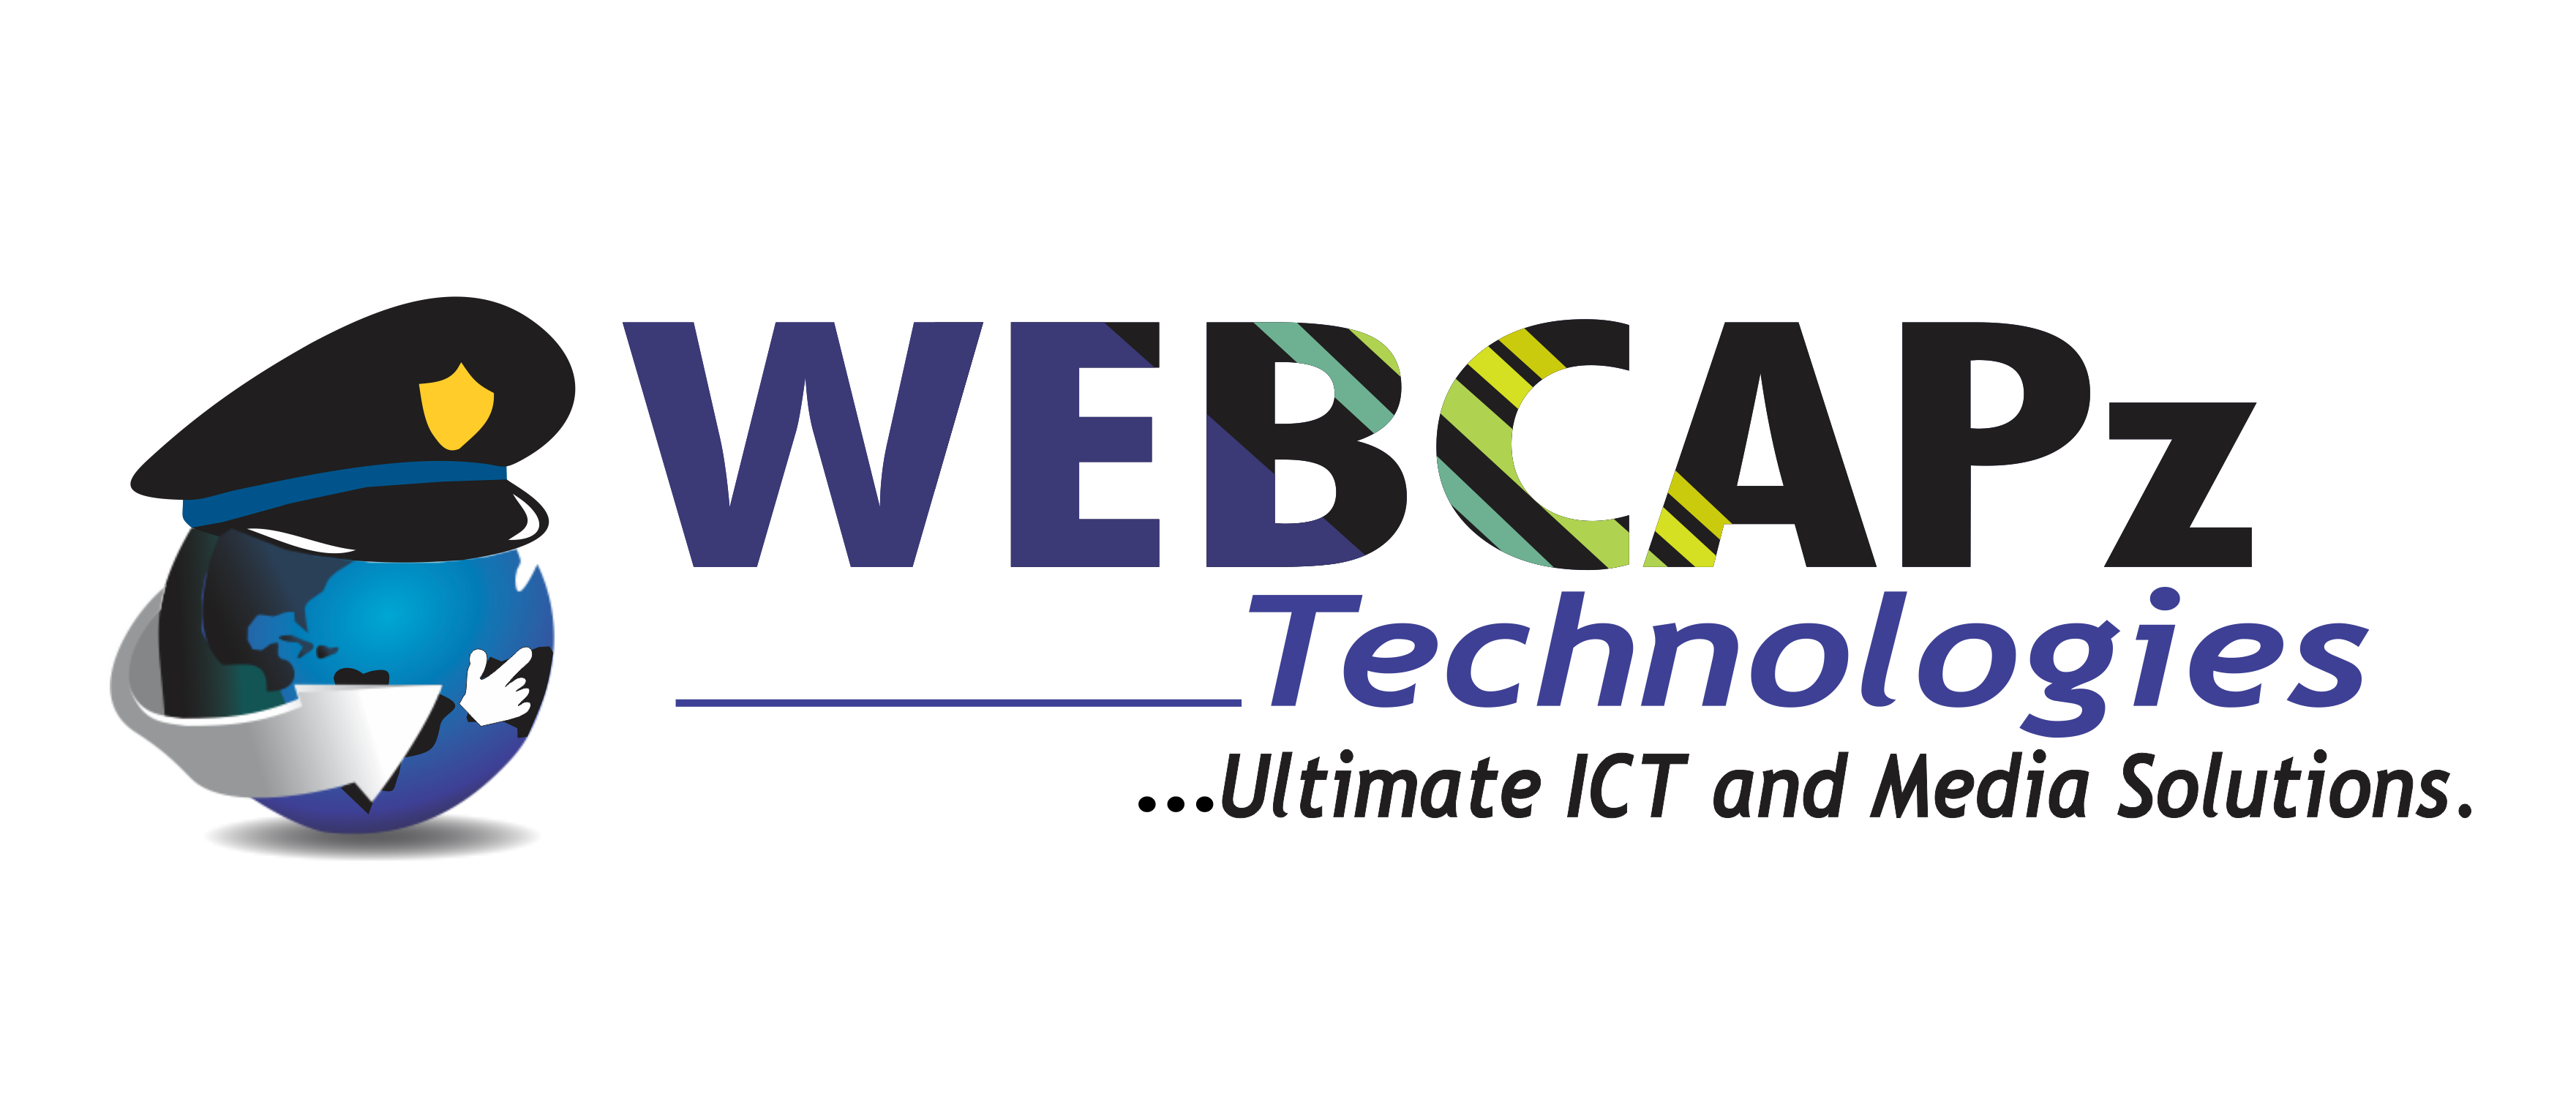 WebCapz Technologies